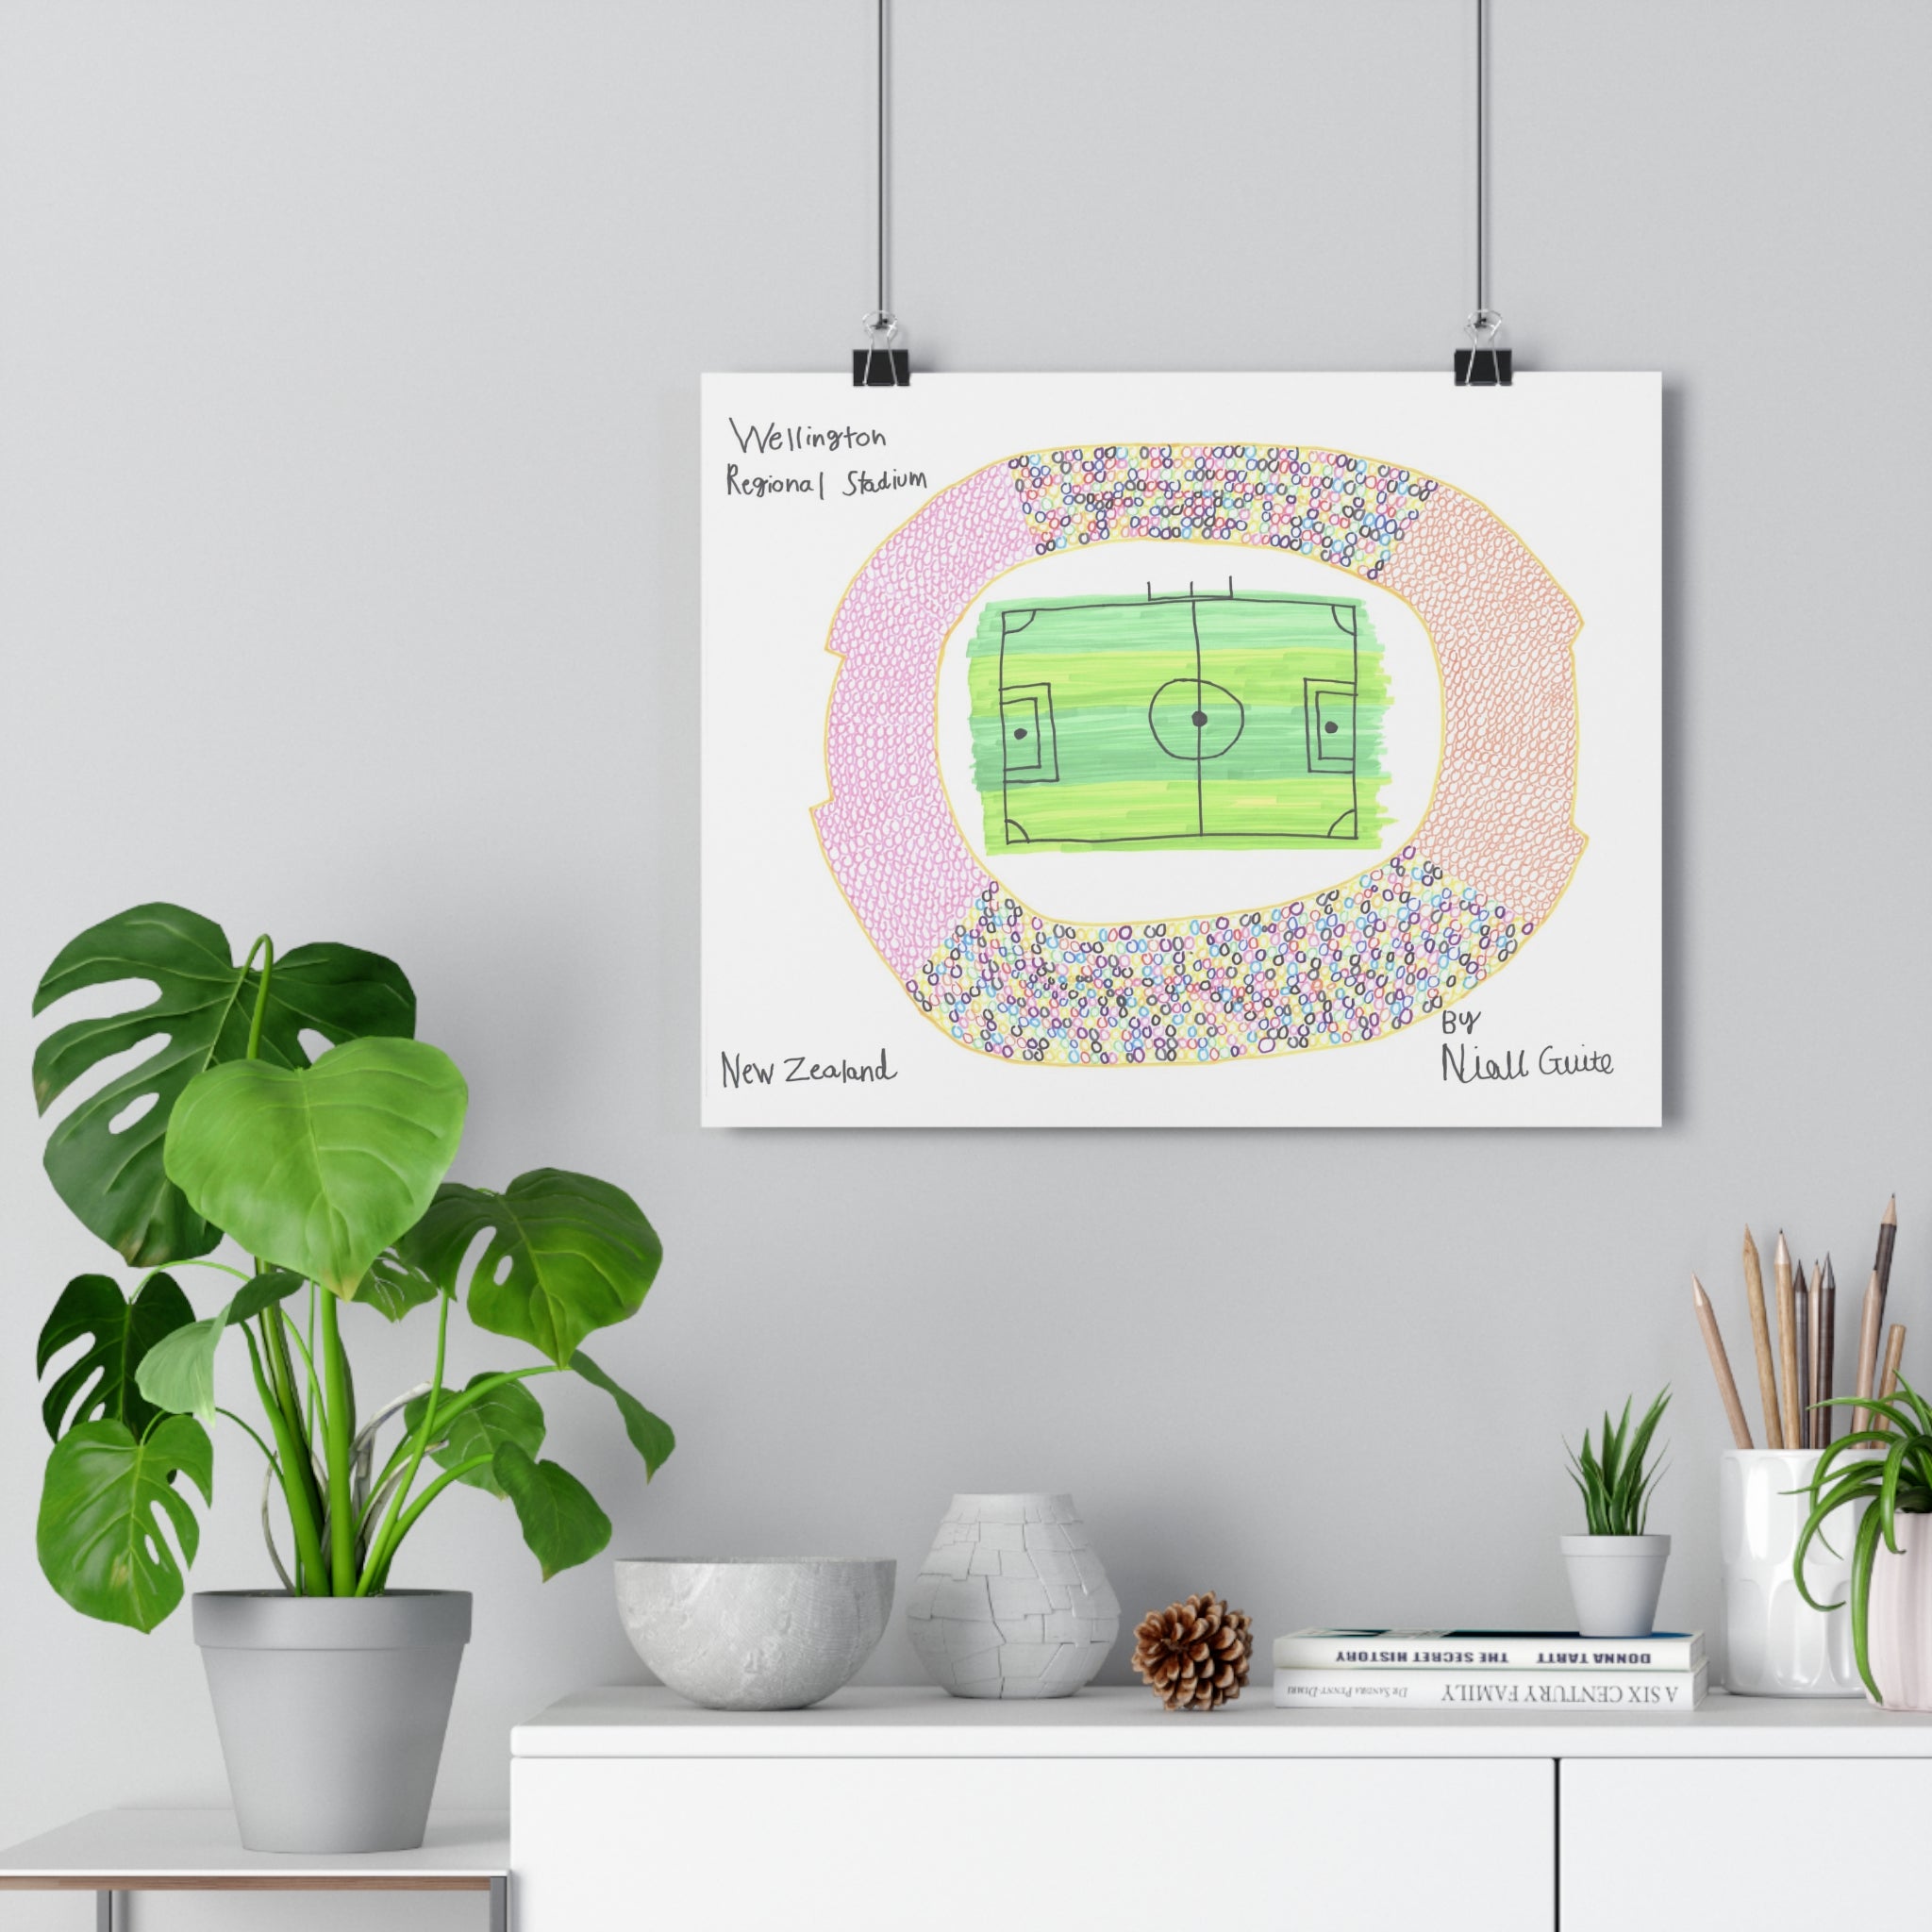 Wellington Regional Stadium - New Zealand - 2023 Women's World Cup Special - Print